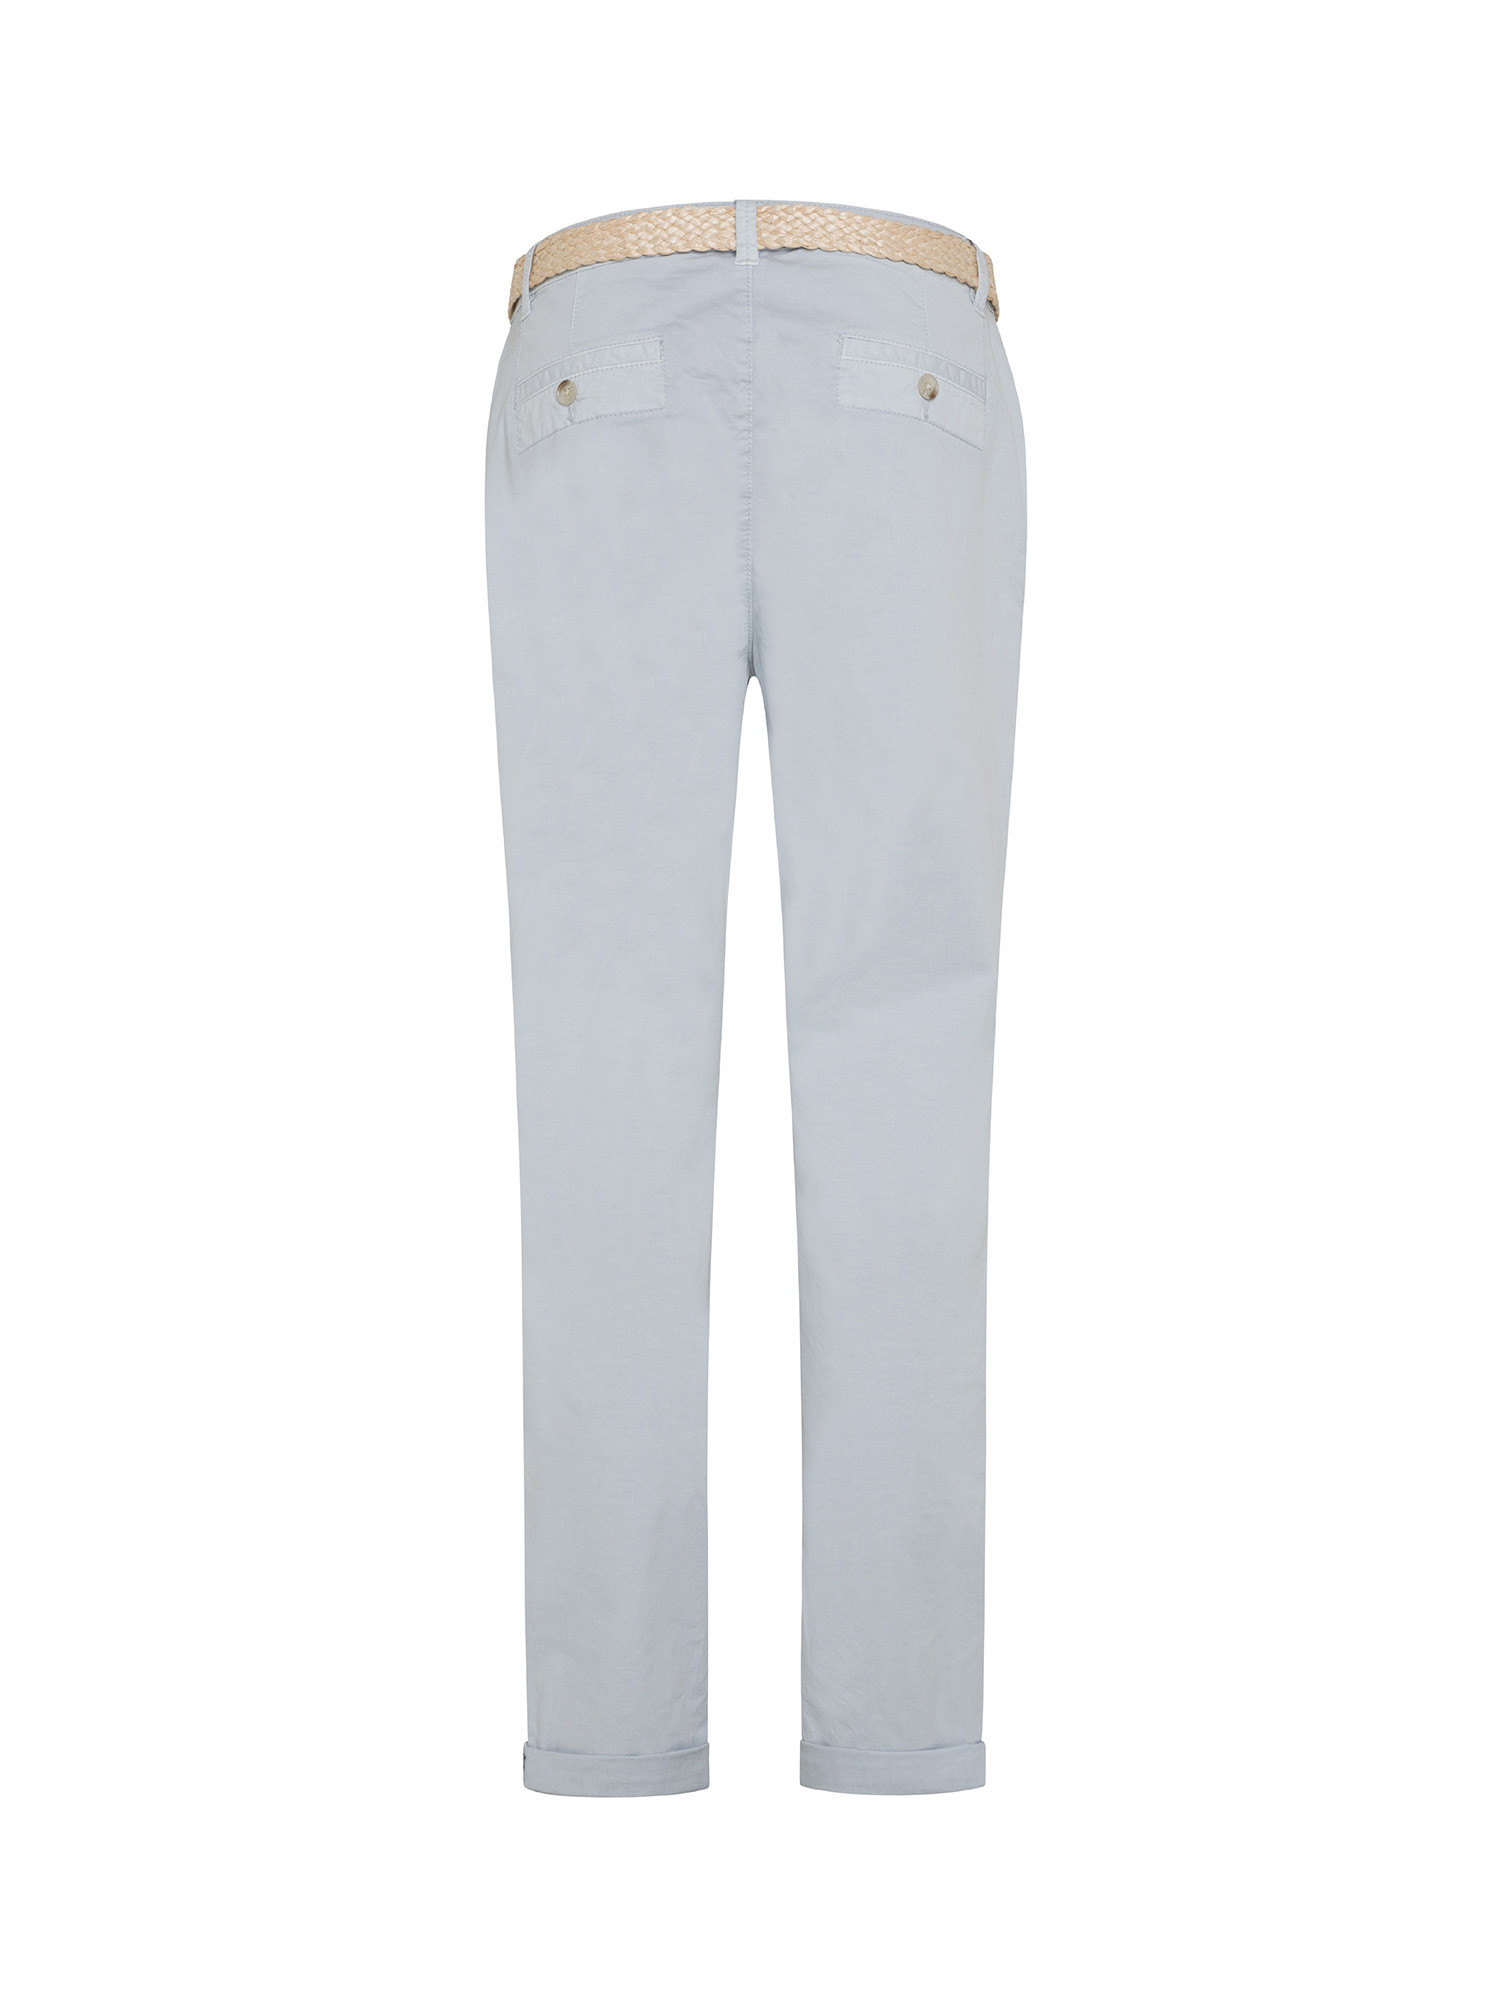 Esprit - Pantaloni chino cropped con cintura, Azzurro, large image number 1